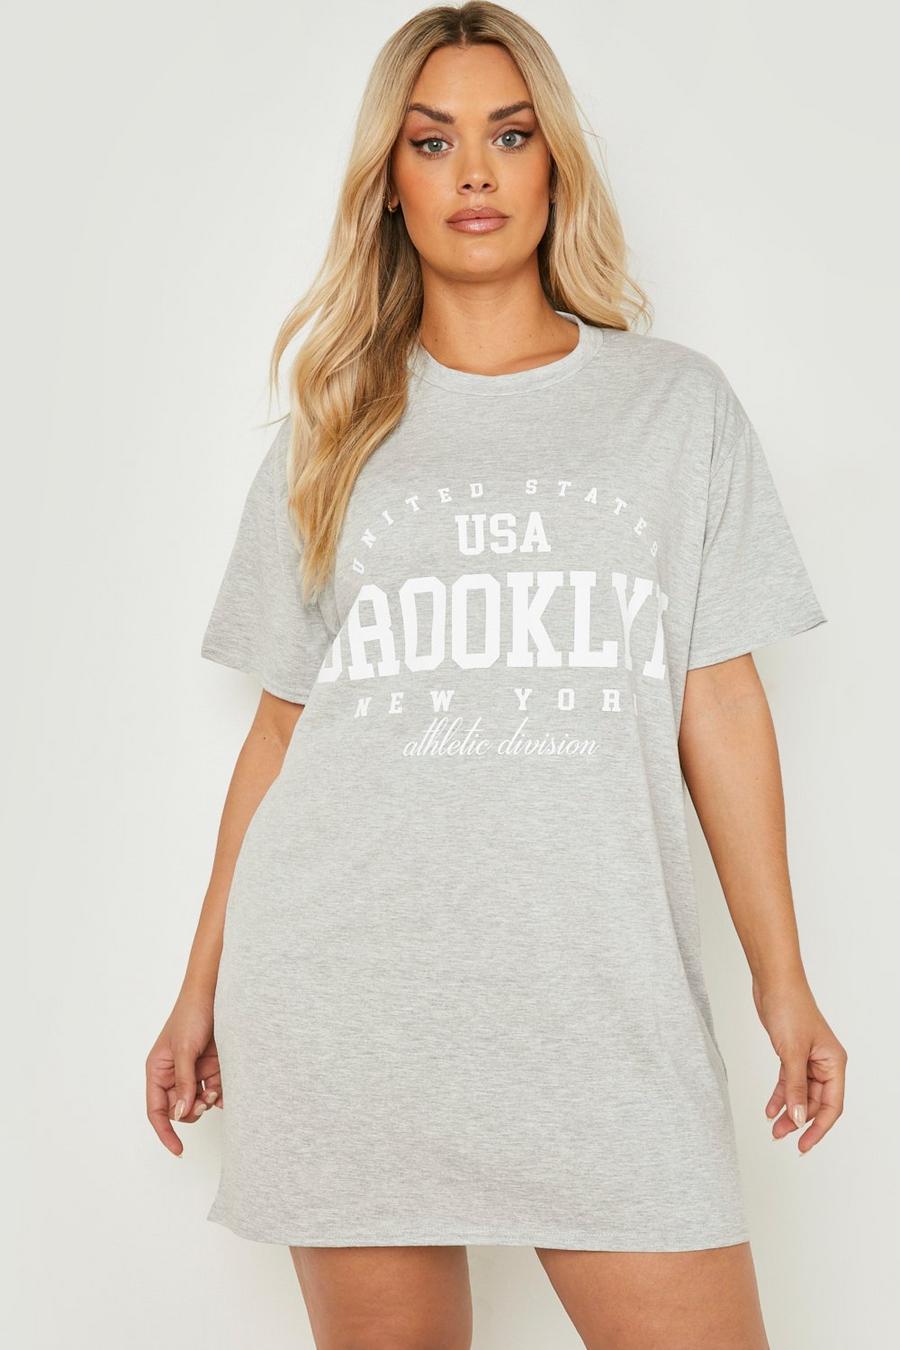 Boohoo UK - shirt Dress - Women's Plus Brooklyn Slogan Oversized T